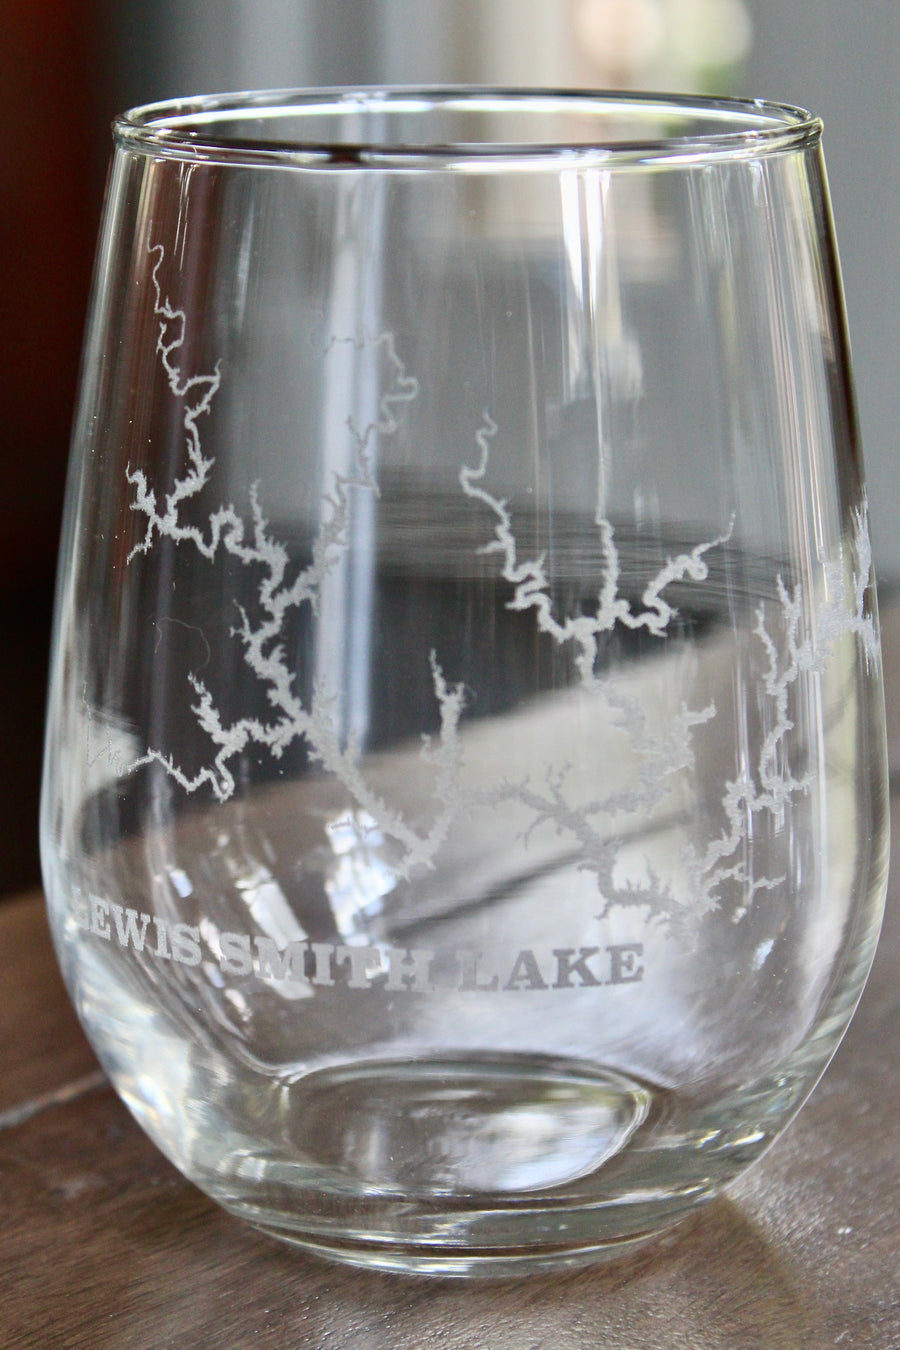 Lewis Smith Lake (AL) Map Engraved Glasses